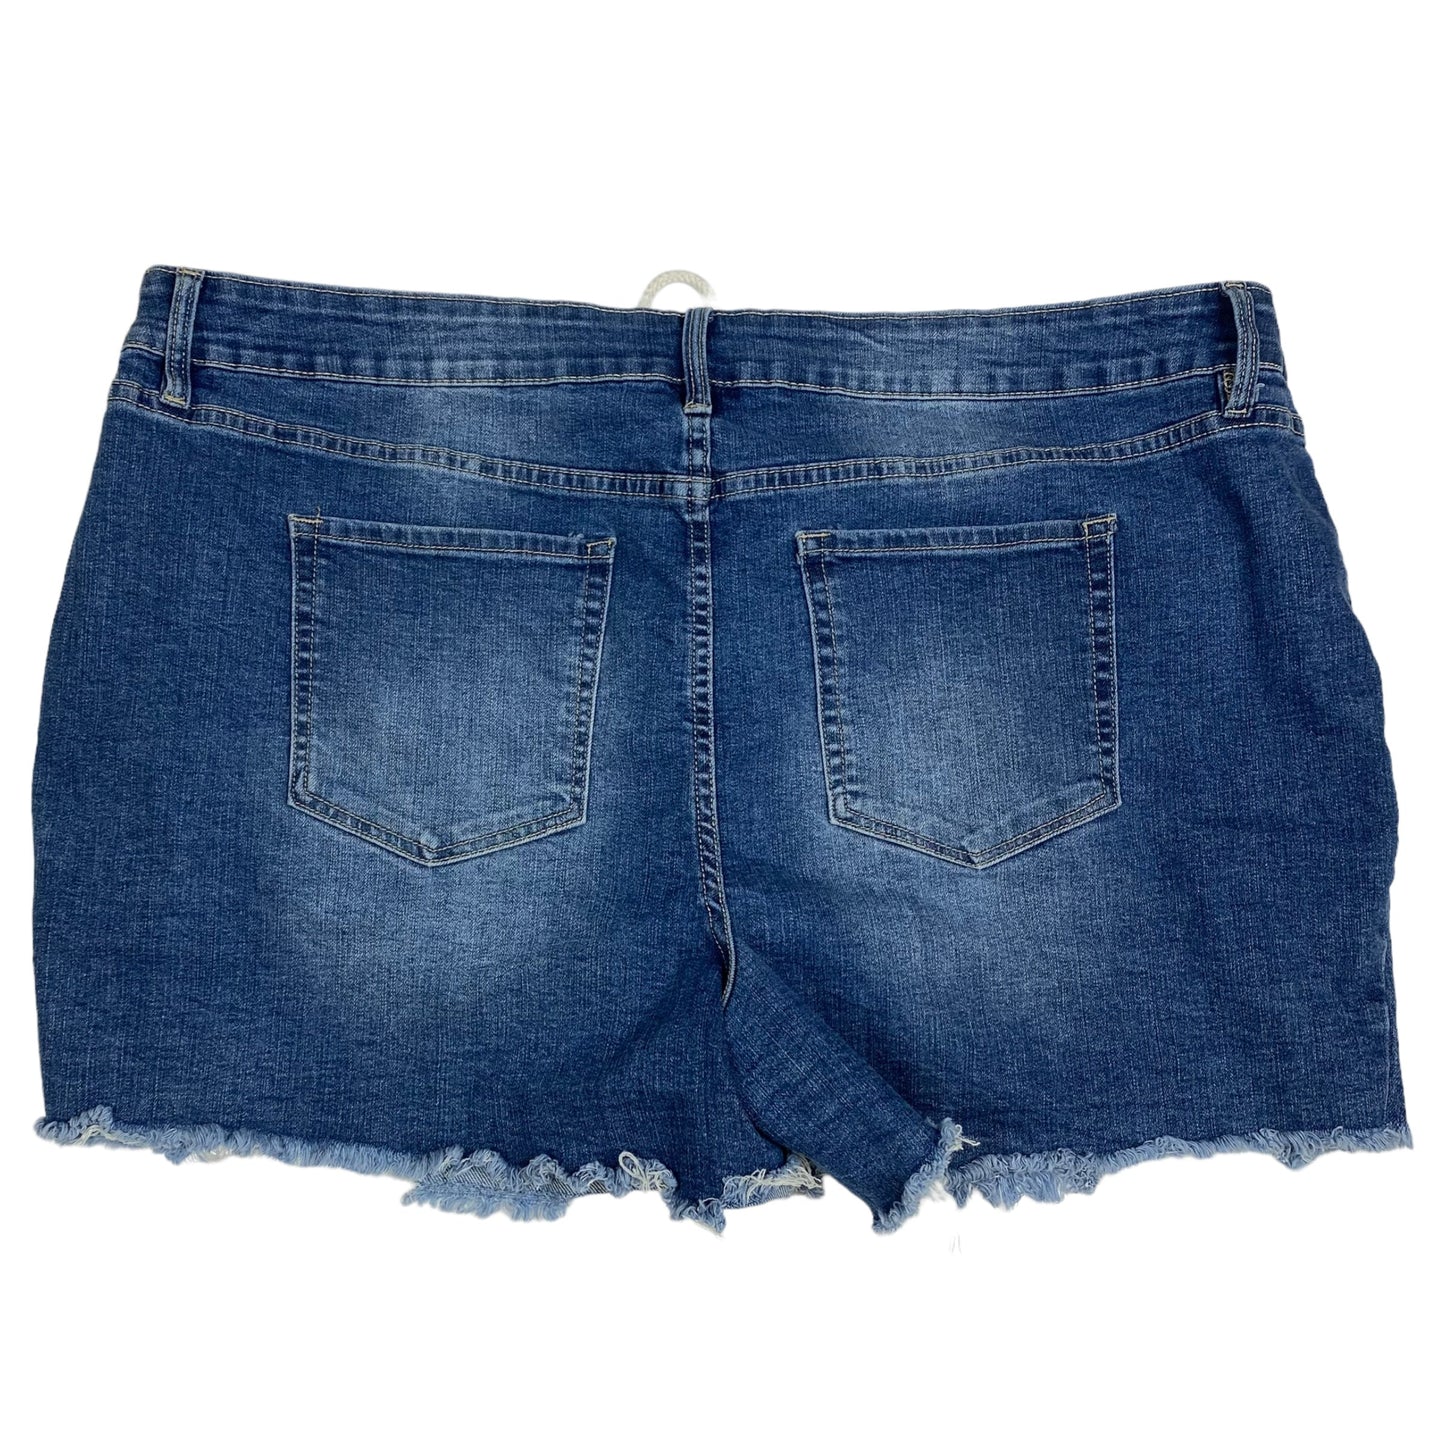 Shorts By Ymi  Size: 3x